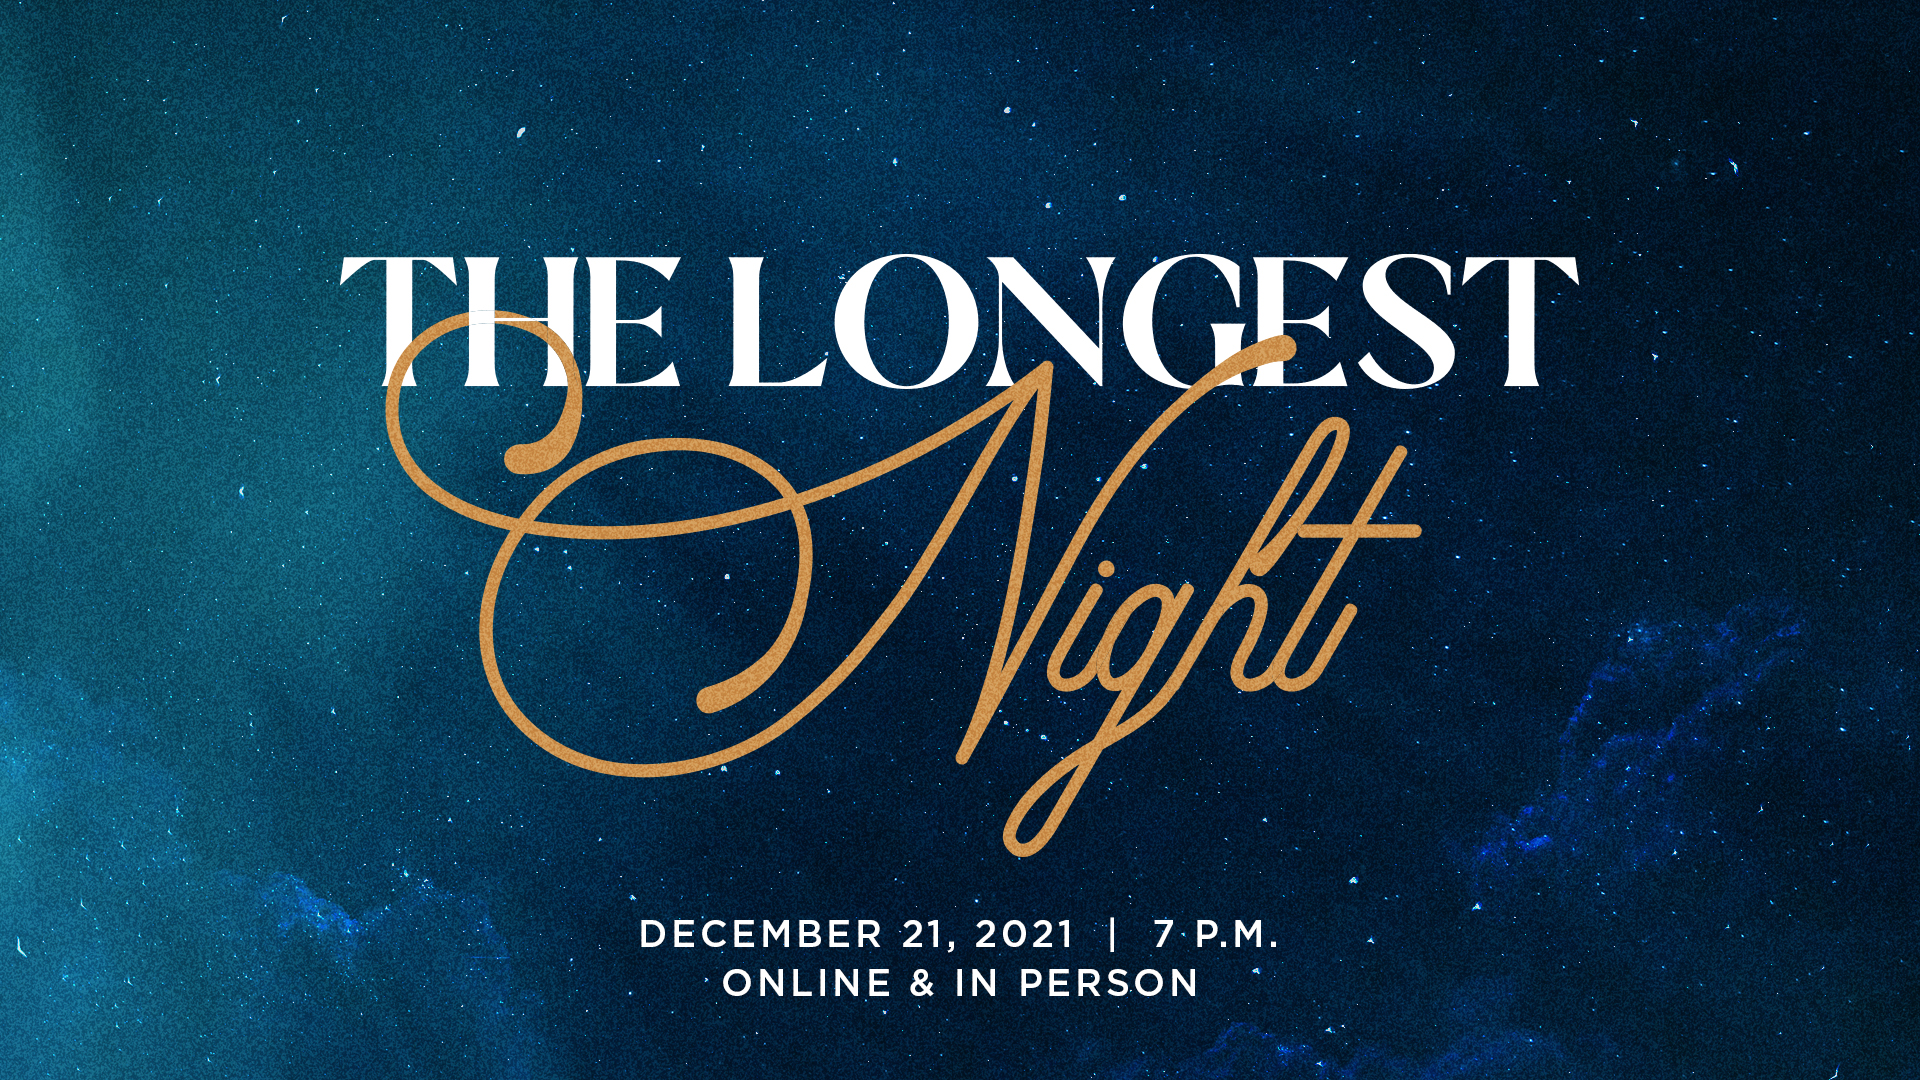 The Longest Night Service